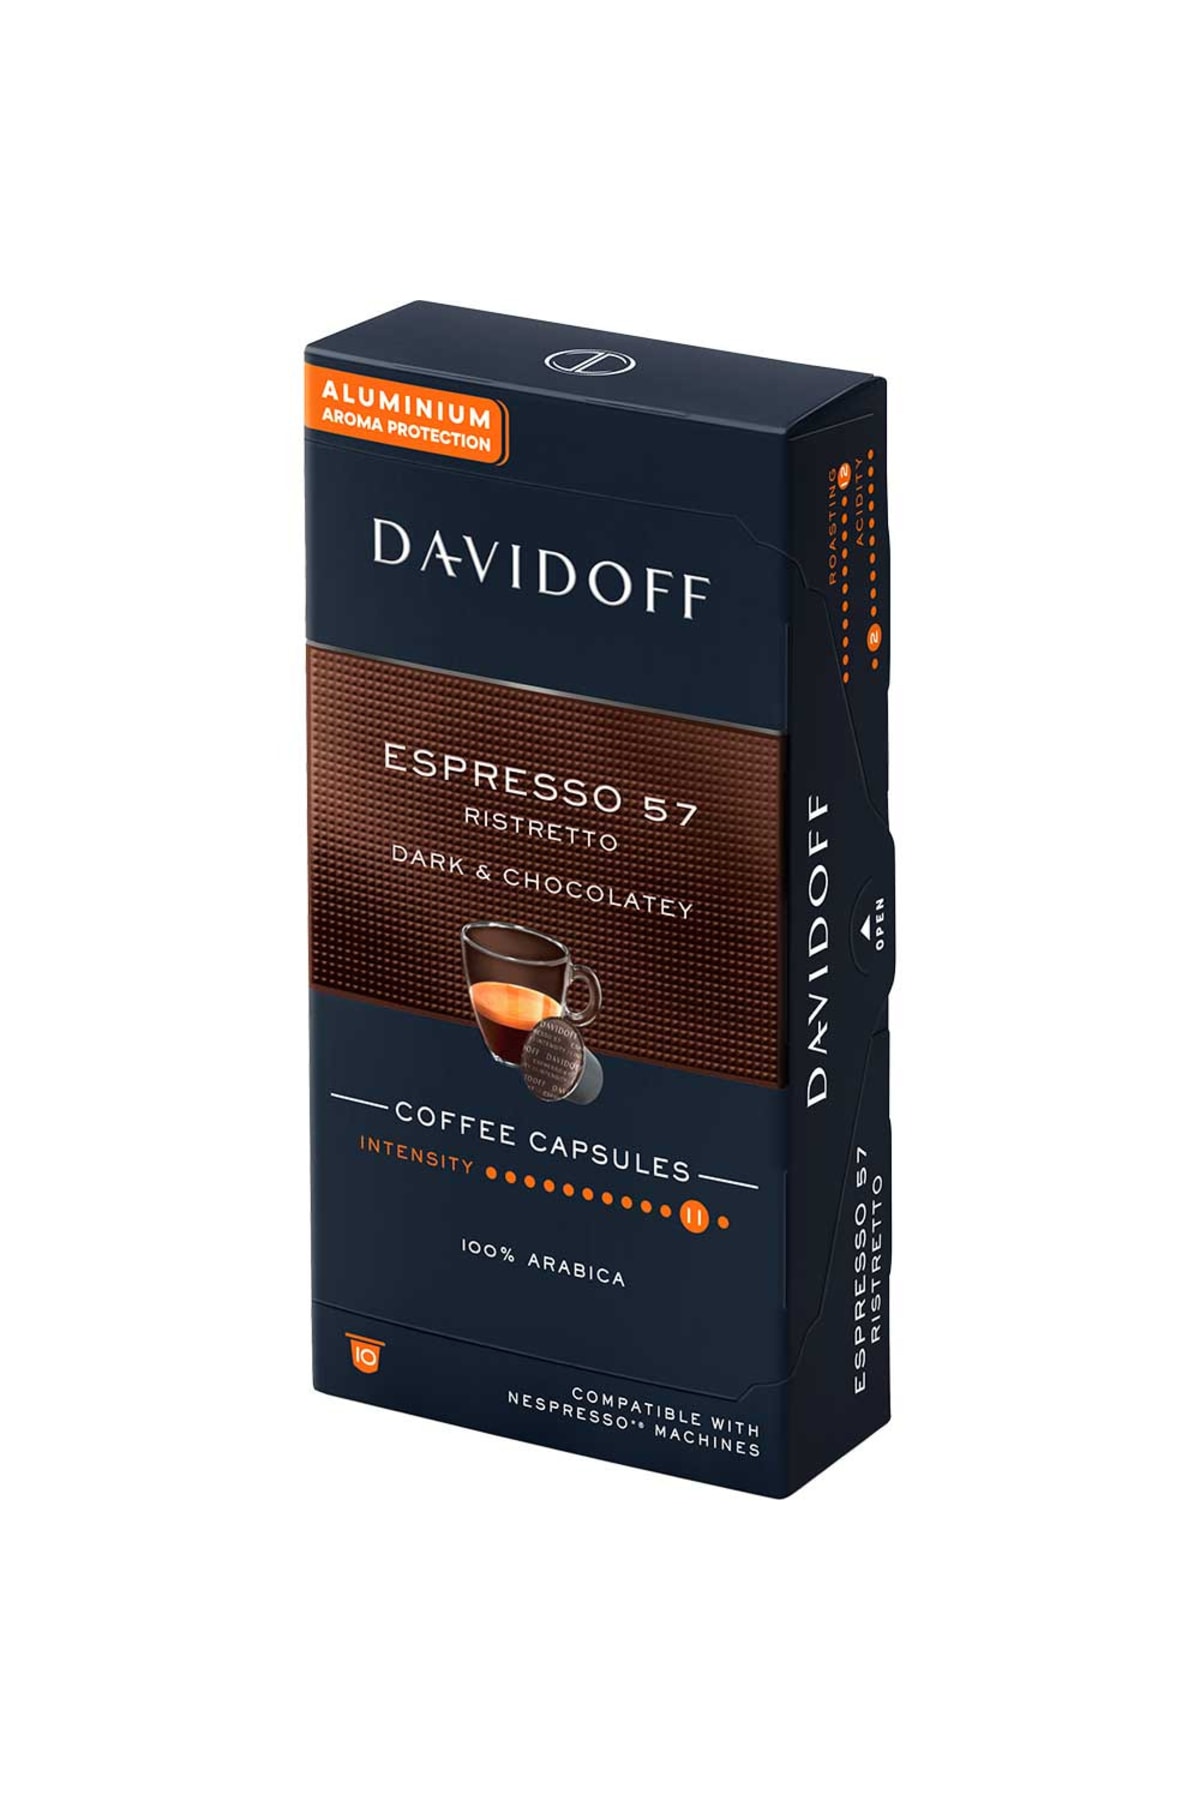 Davidoff Espresso 57 Rıstretto Dark & Chocolatey Aluminium Kapsül Kahve 10'lu (nespresso Uyumlu)